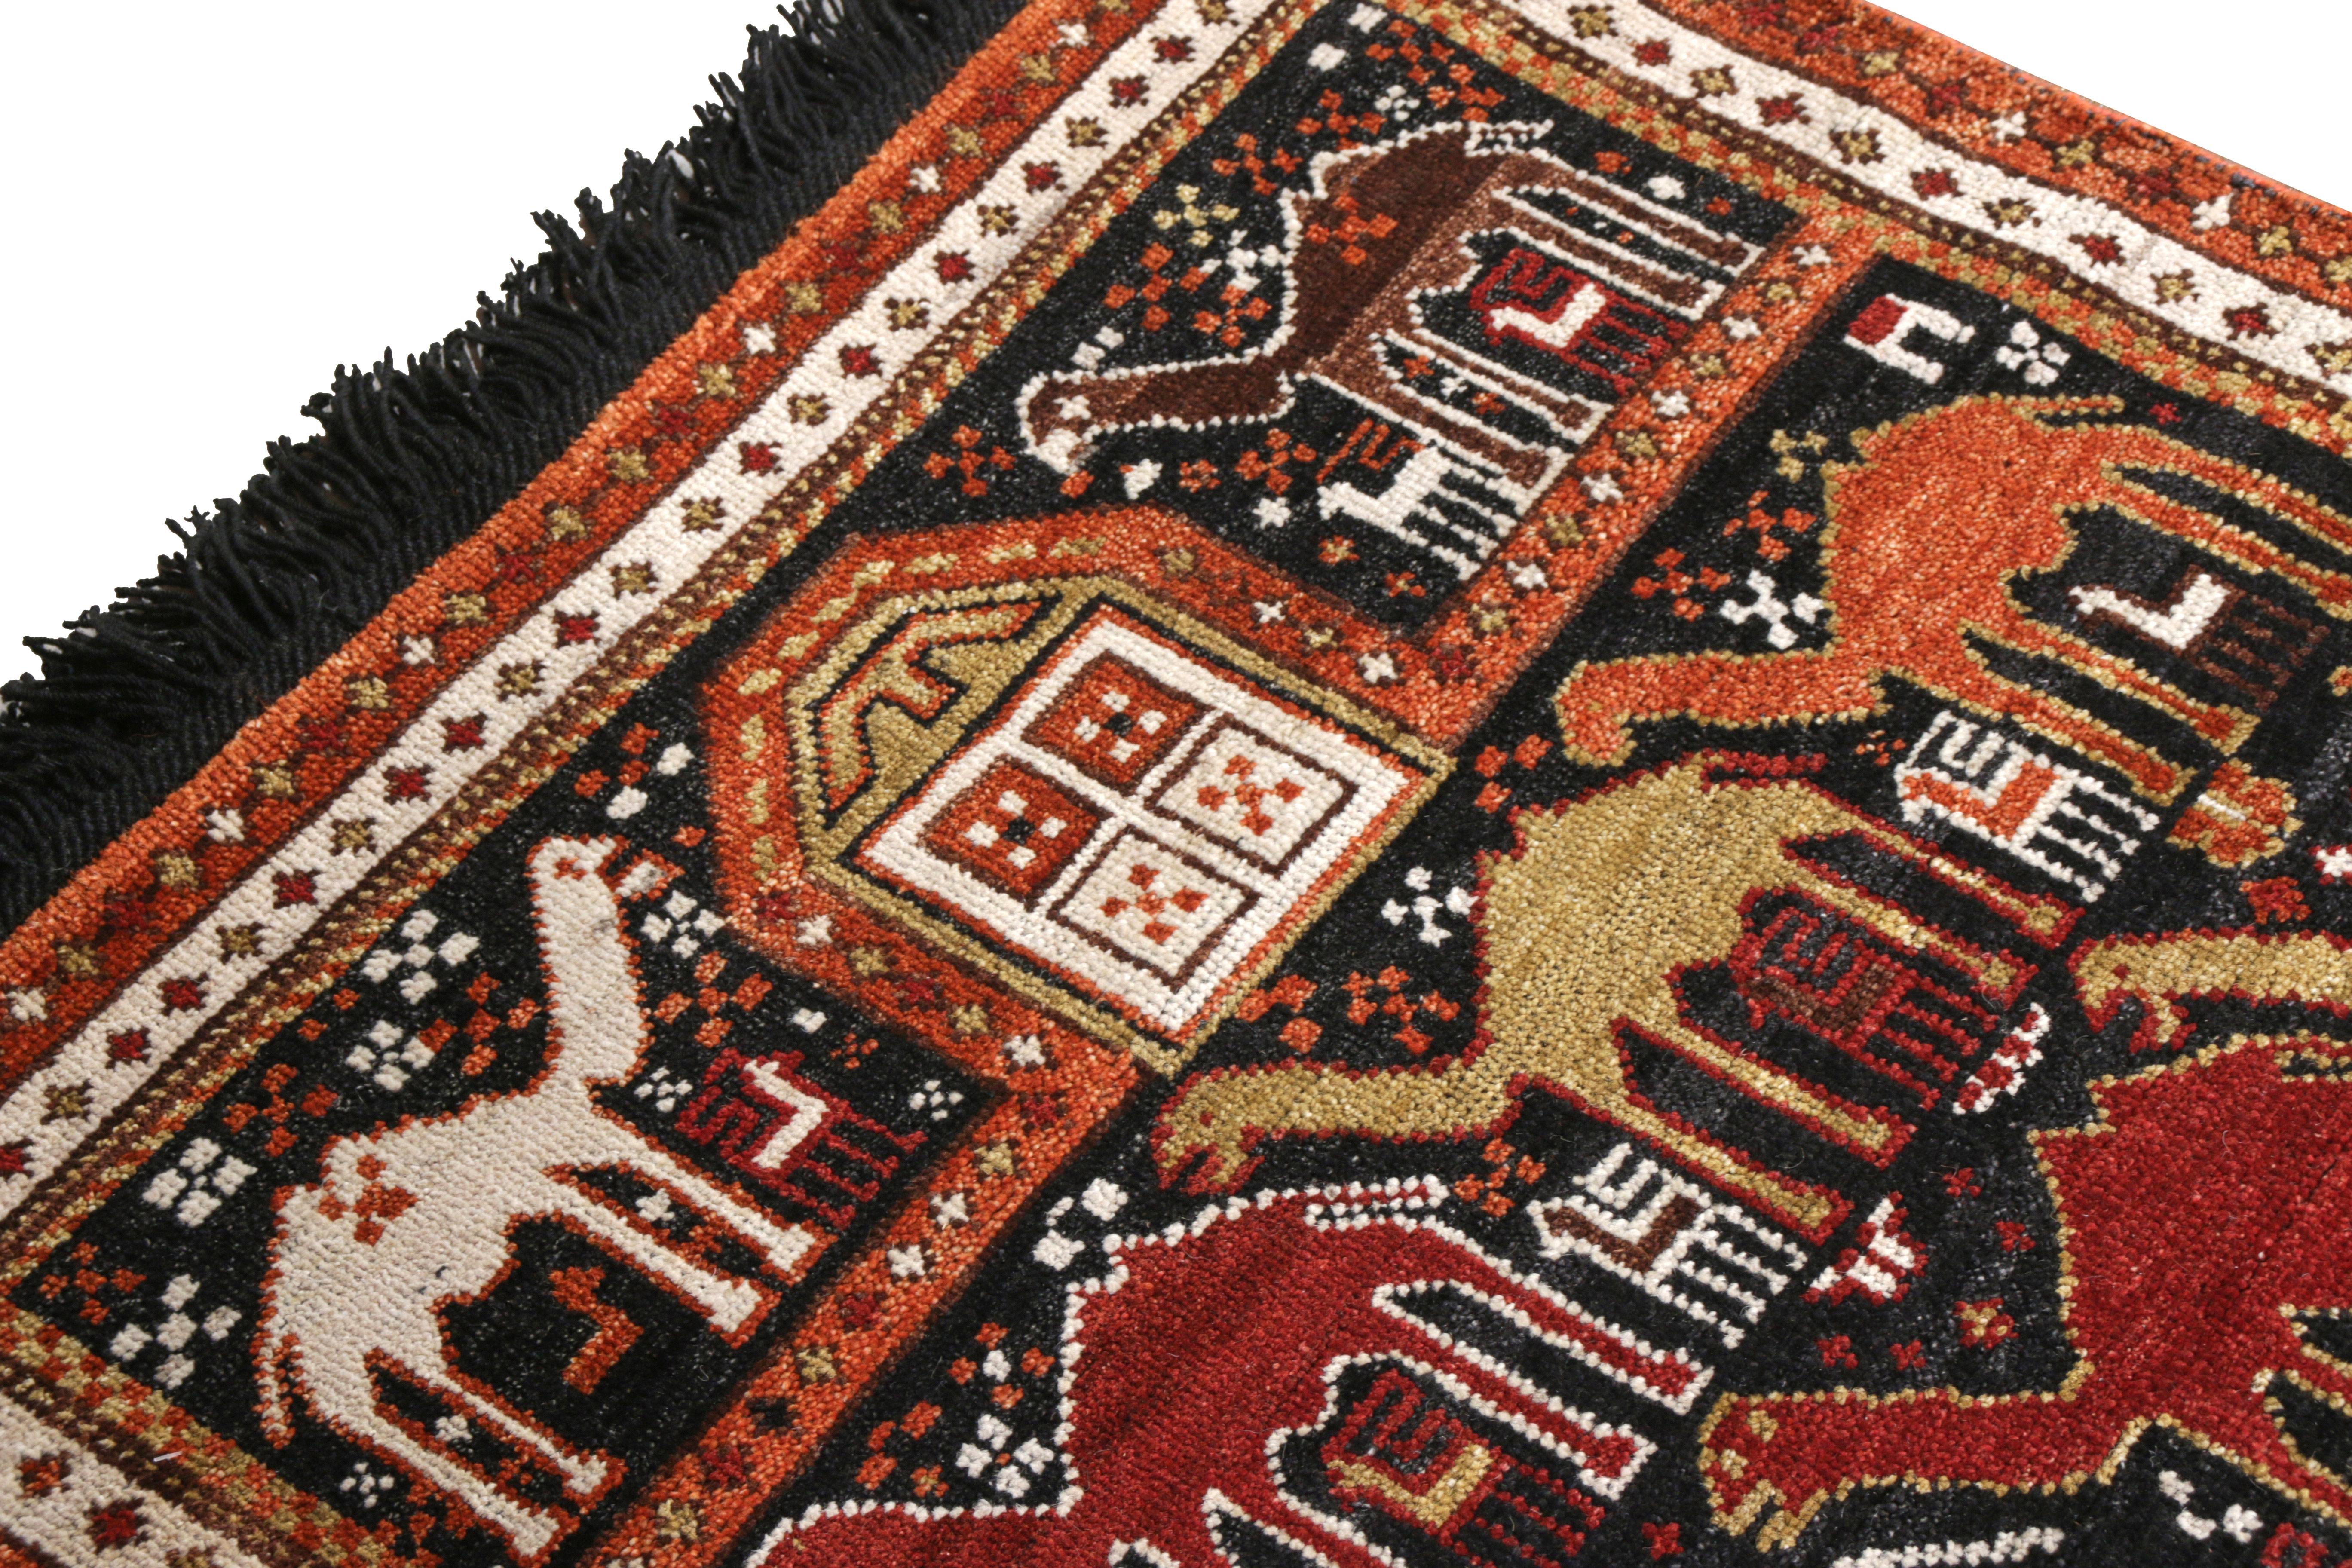 Tribal Rug & Kilim's Classic Camel Motif Custom Rug in Orange Brown Caucasian Pattern